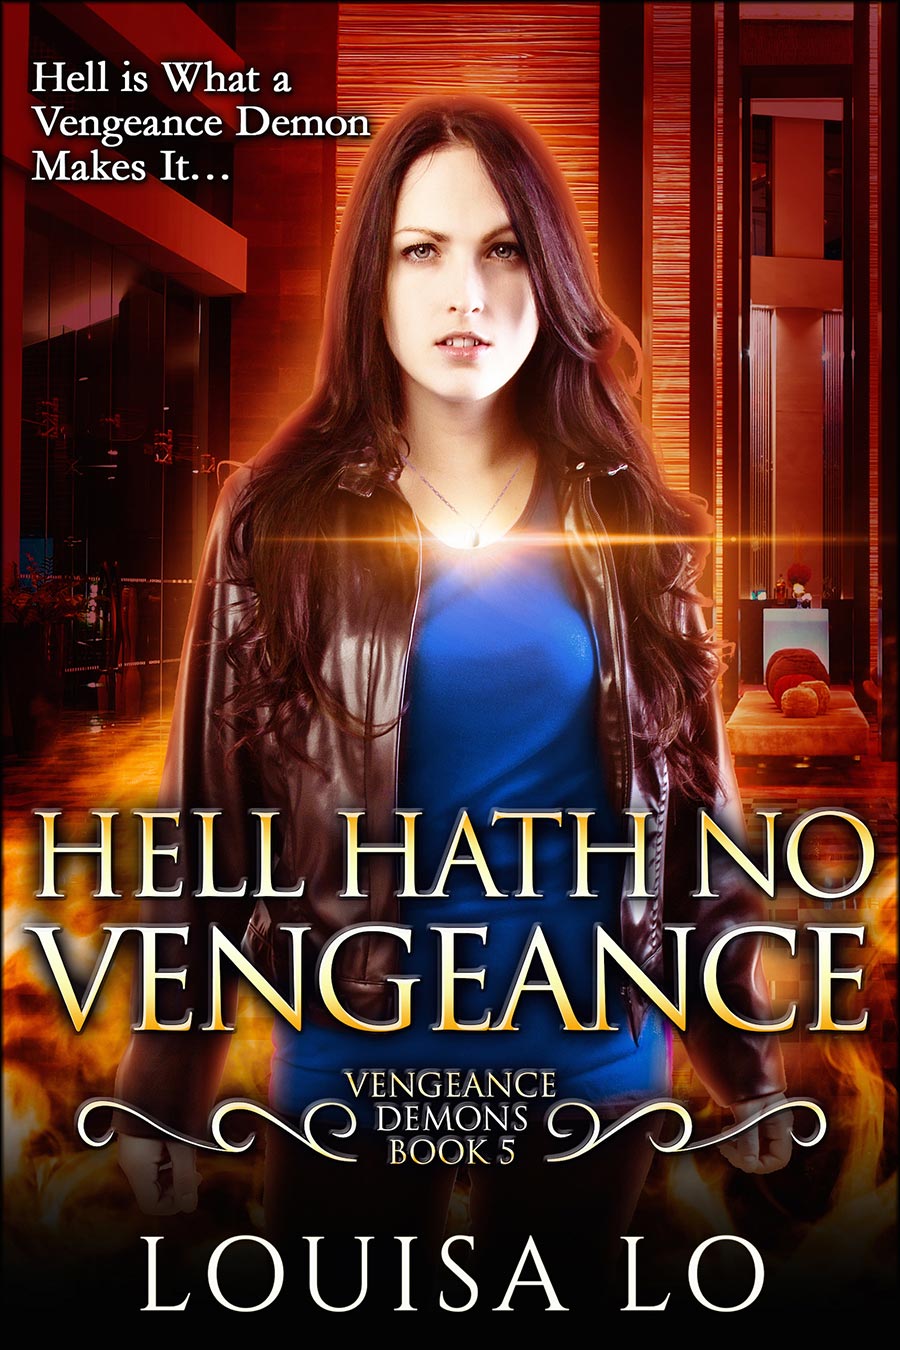 Louisa-Lo---Hell-Hath-No-Vengeance---book-5.jpg